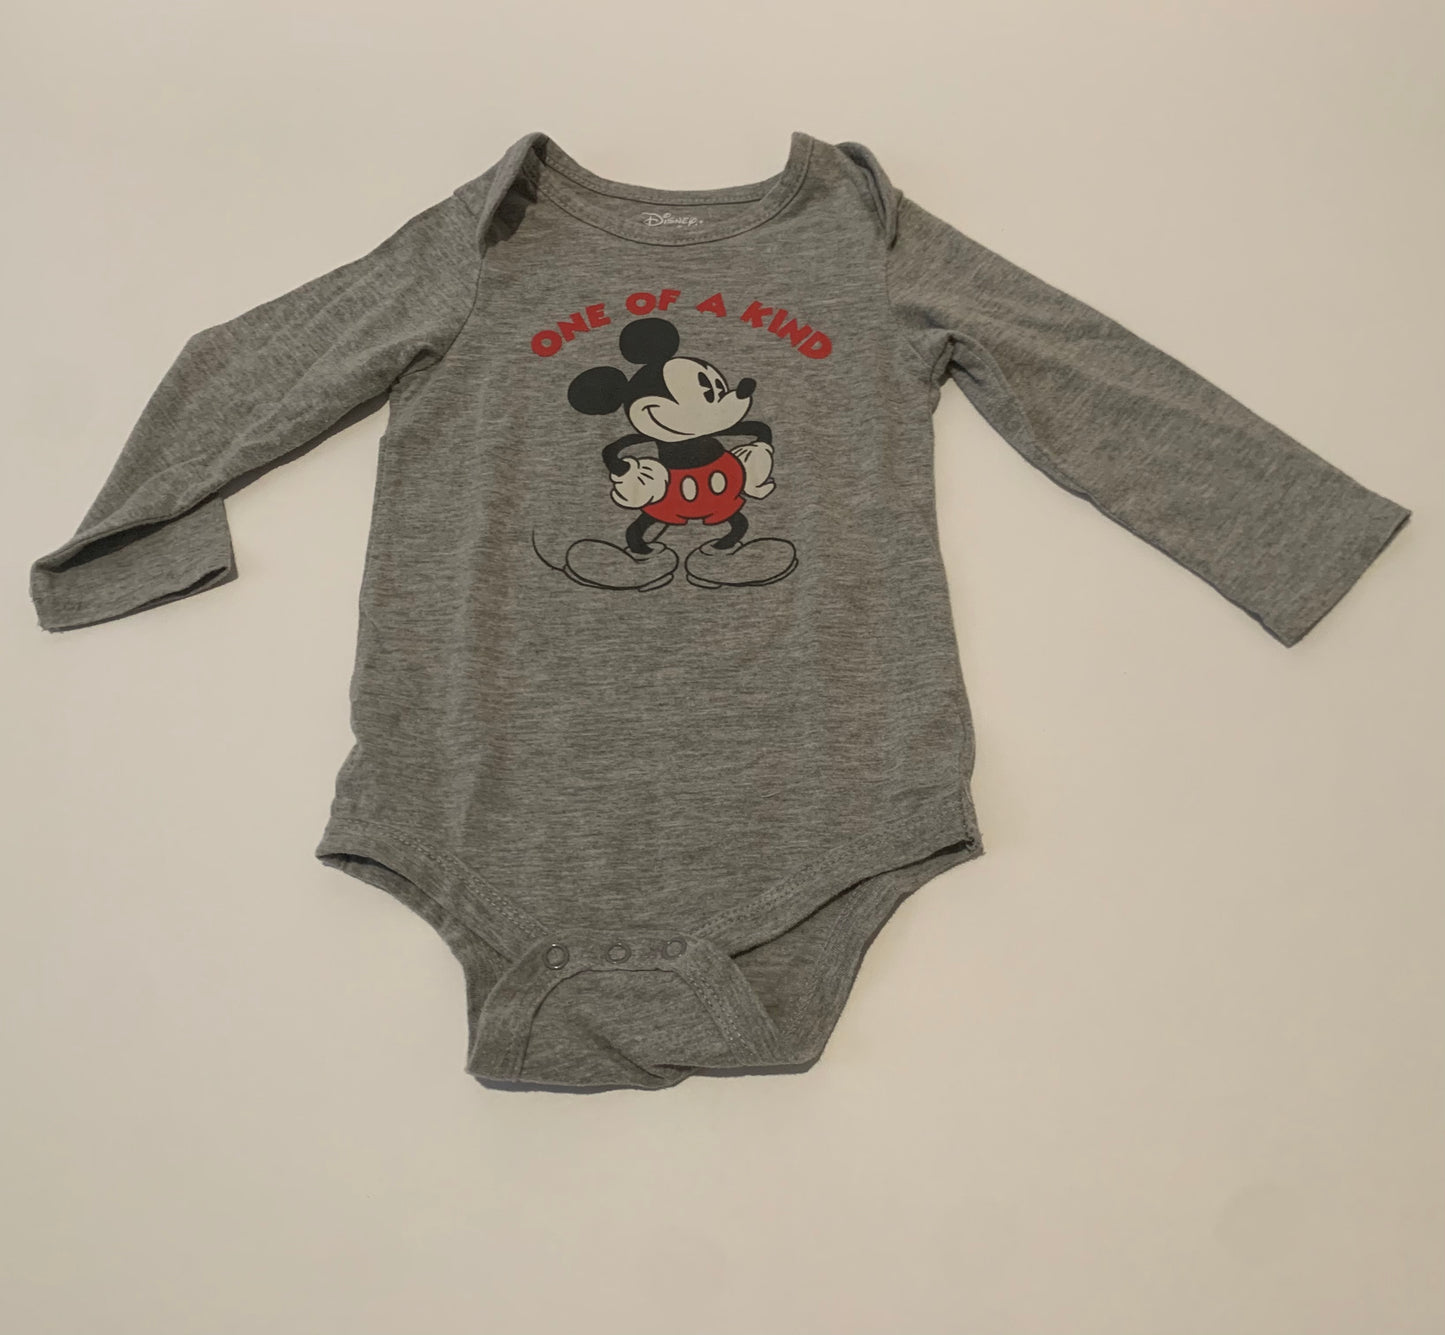 18 months Boys Disney Baby Mickey One of Kind Gray Onesie